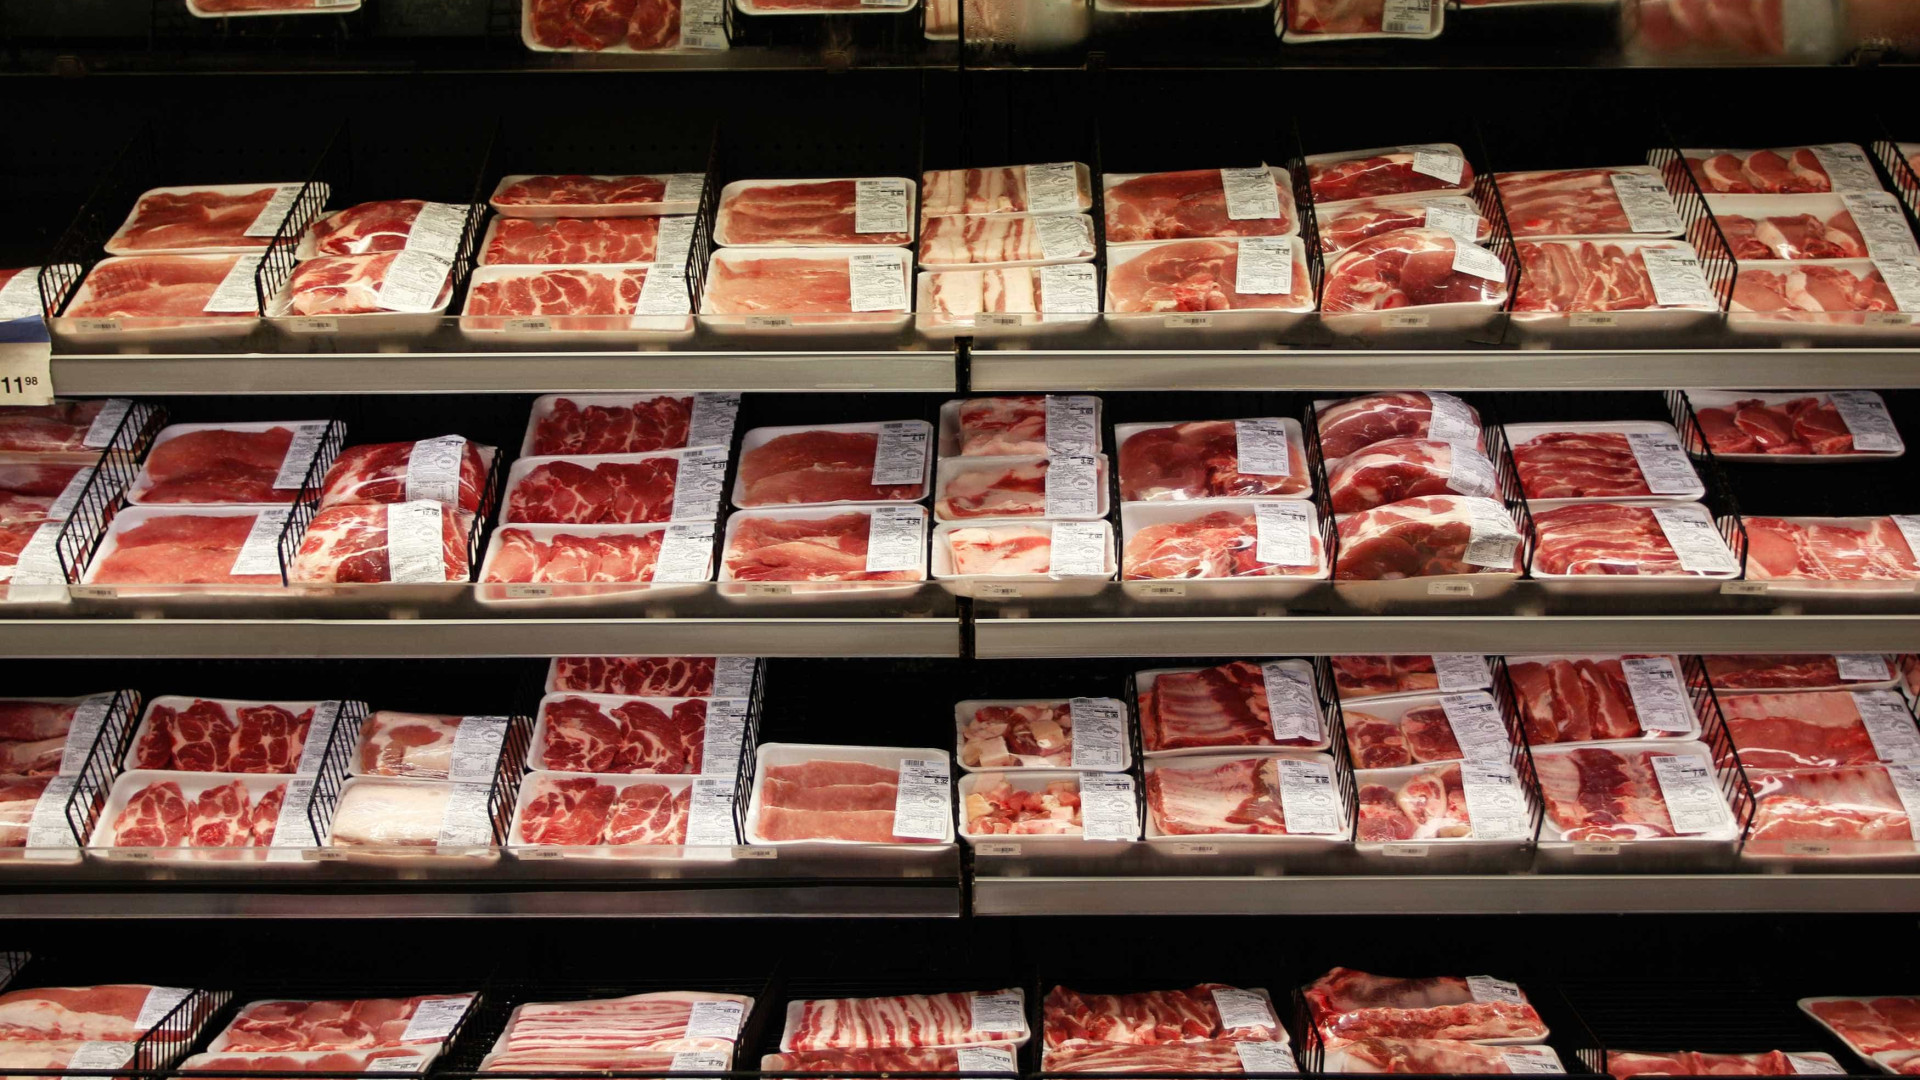 Anvisa proíbe restaurantes de usar
carne de 3 frigoríficos investigados